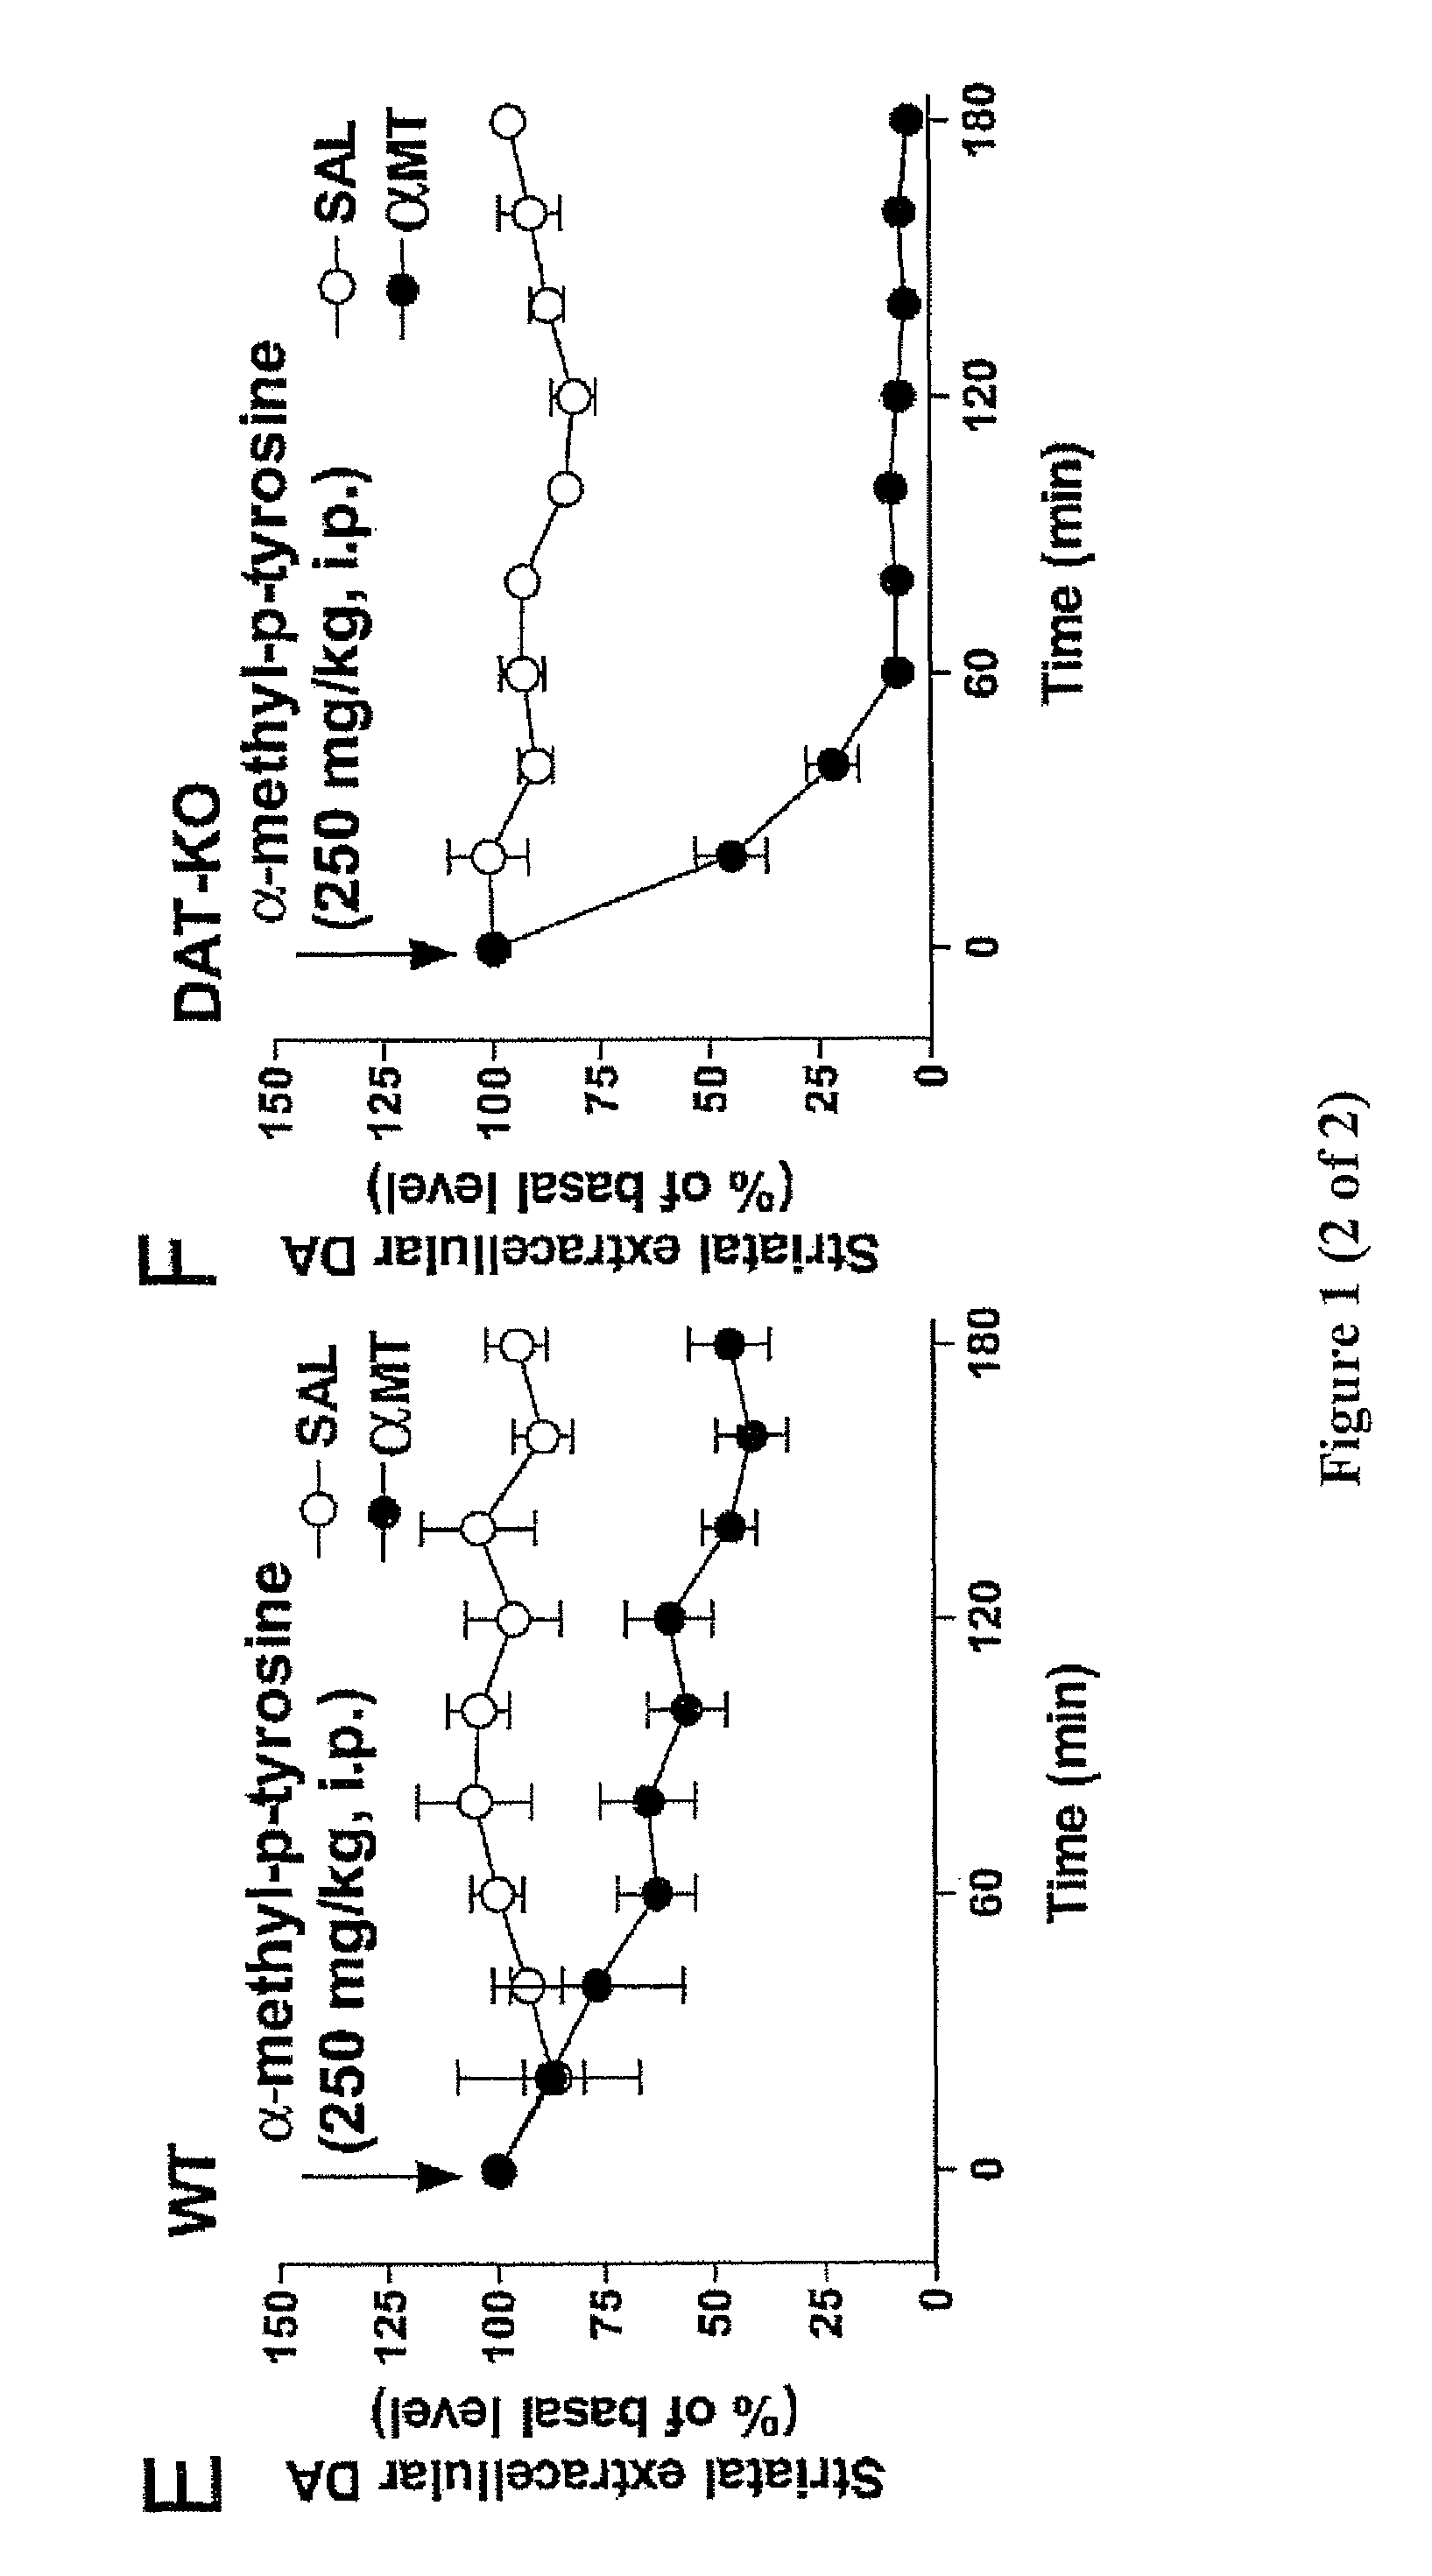 Antiparkinsonian action of phenylisopropylamines